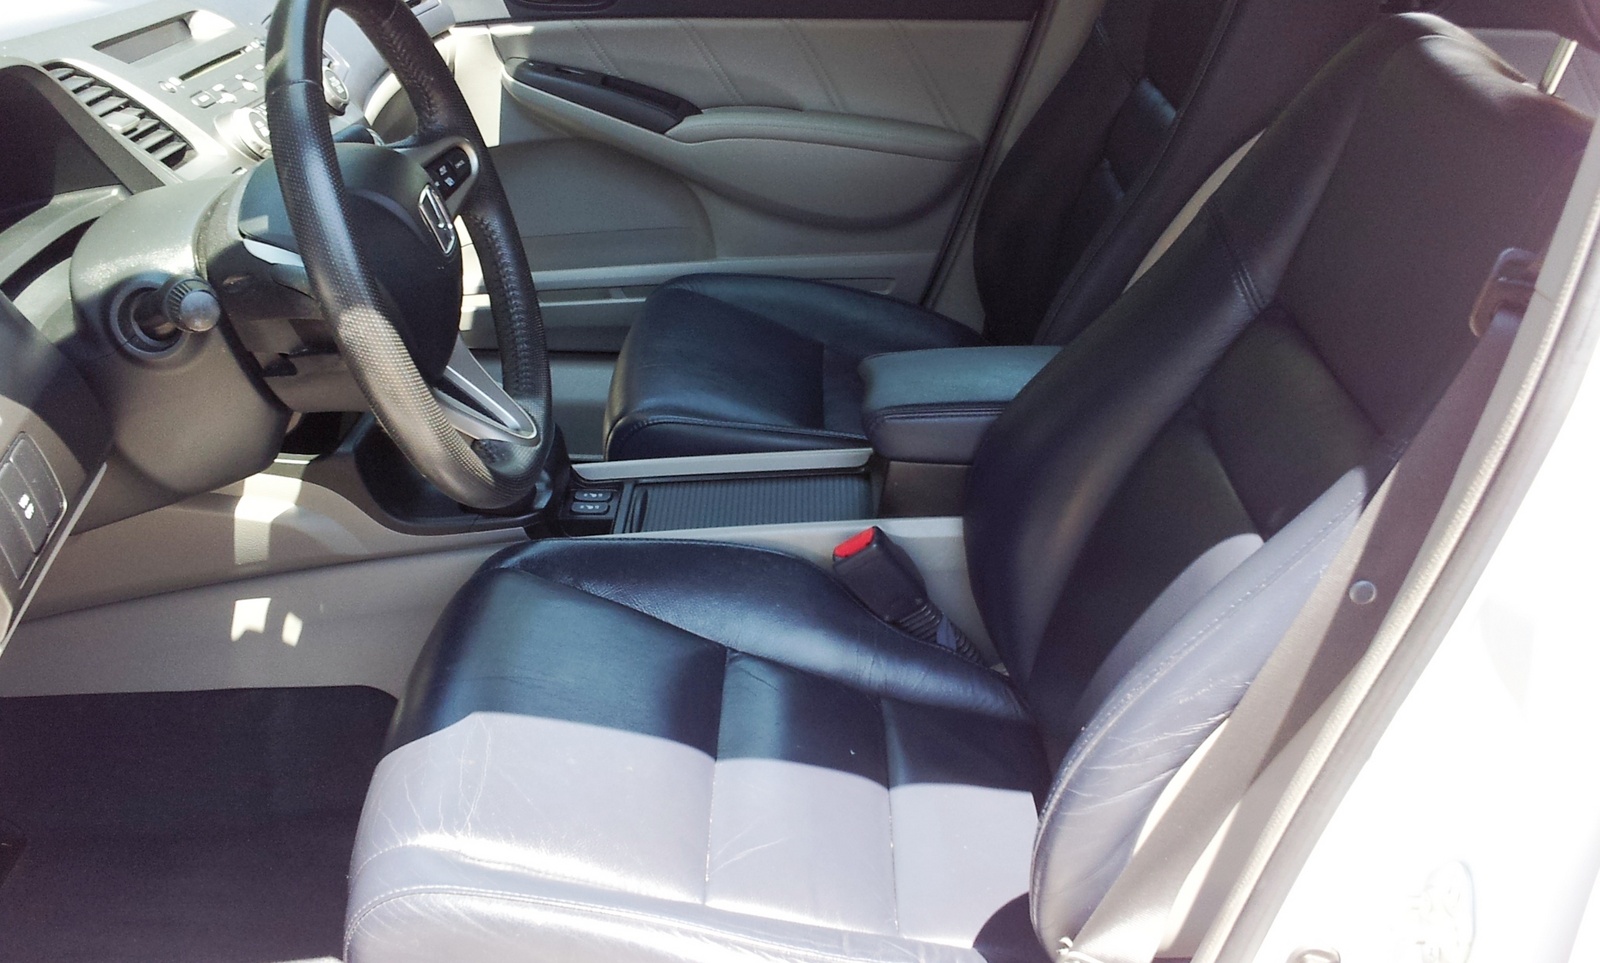 1998 Honda civic leather seats #2